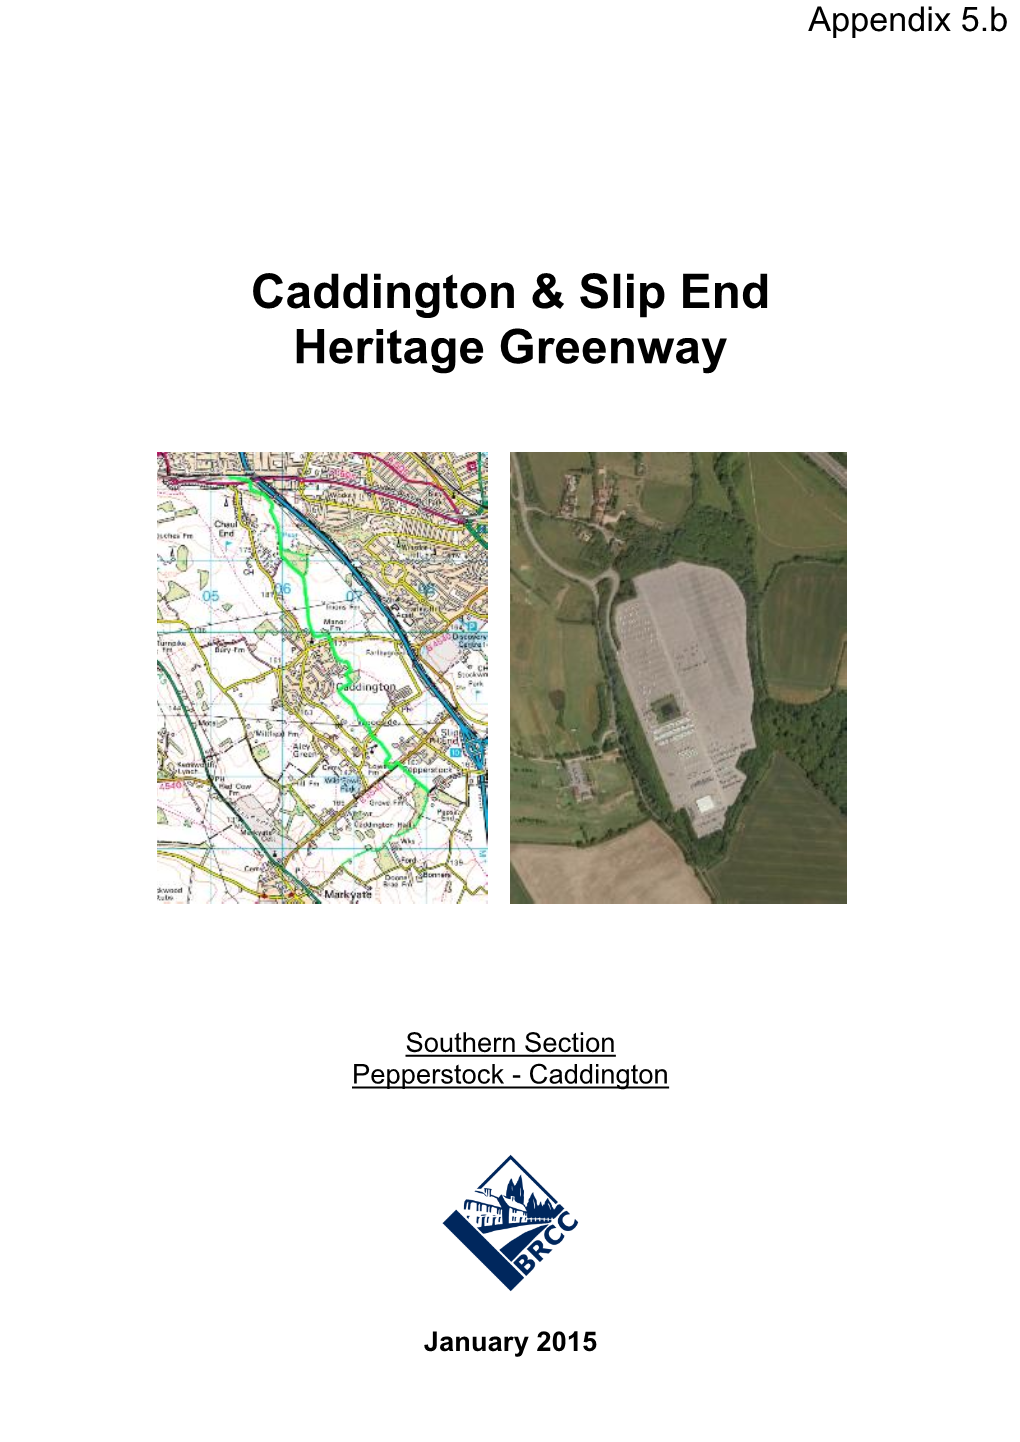 Caddington & Slip End Heritage Greenway